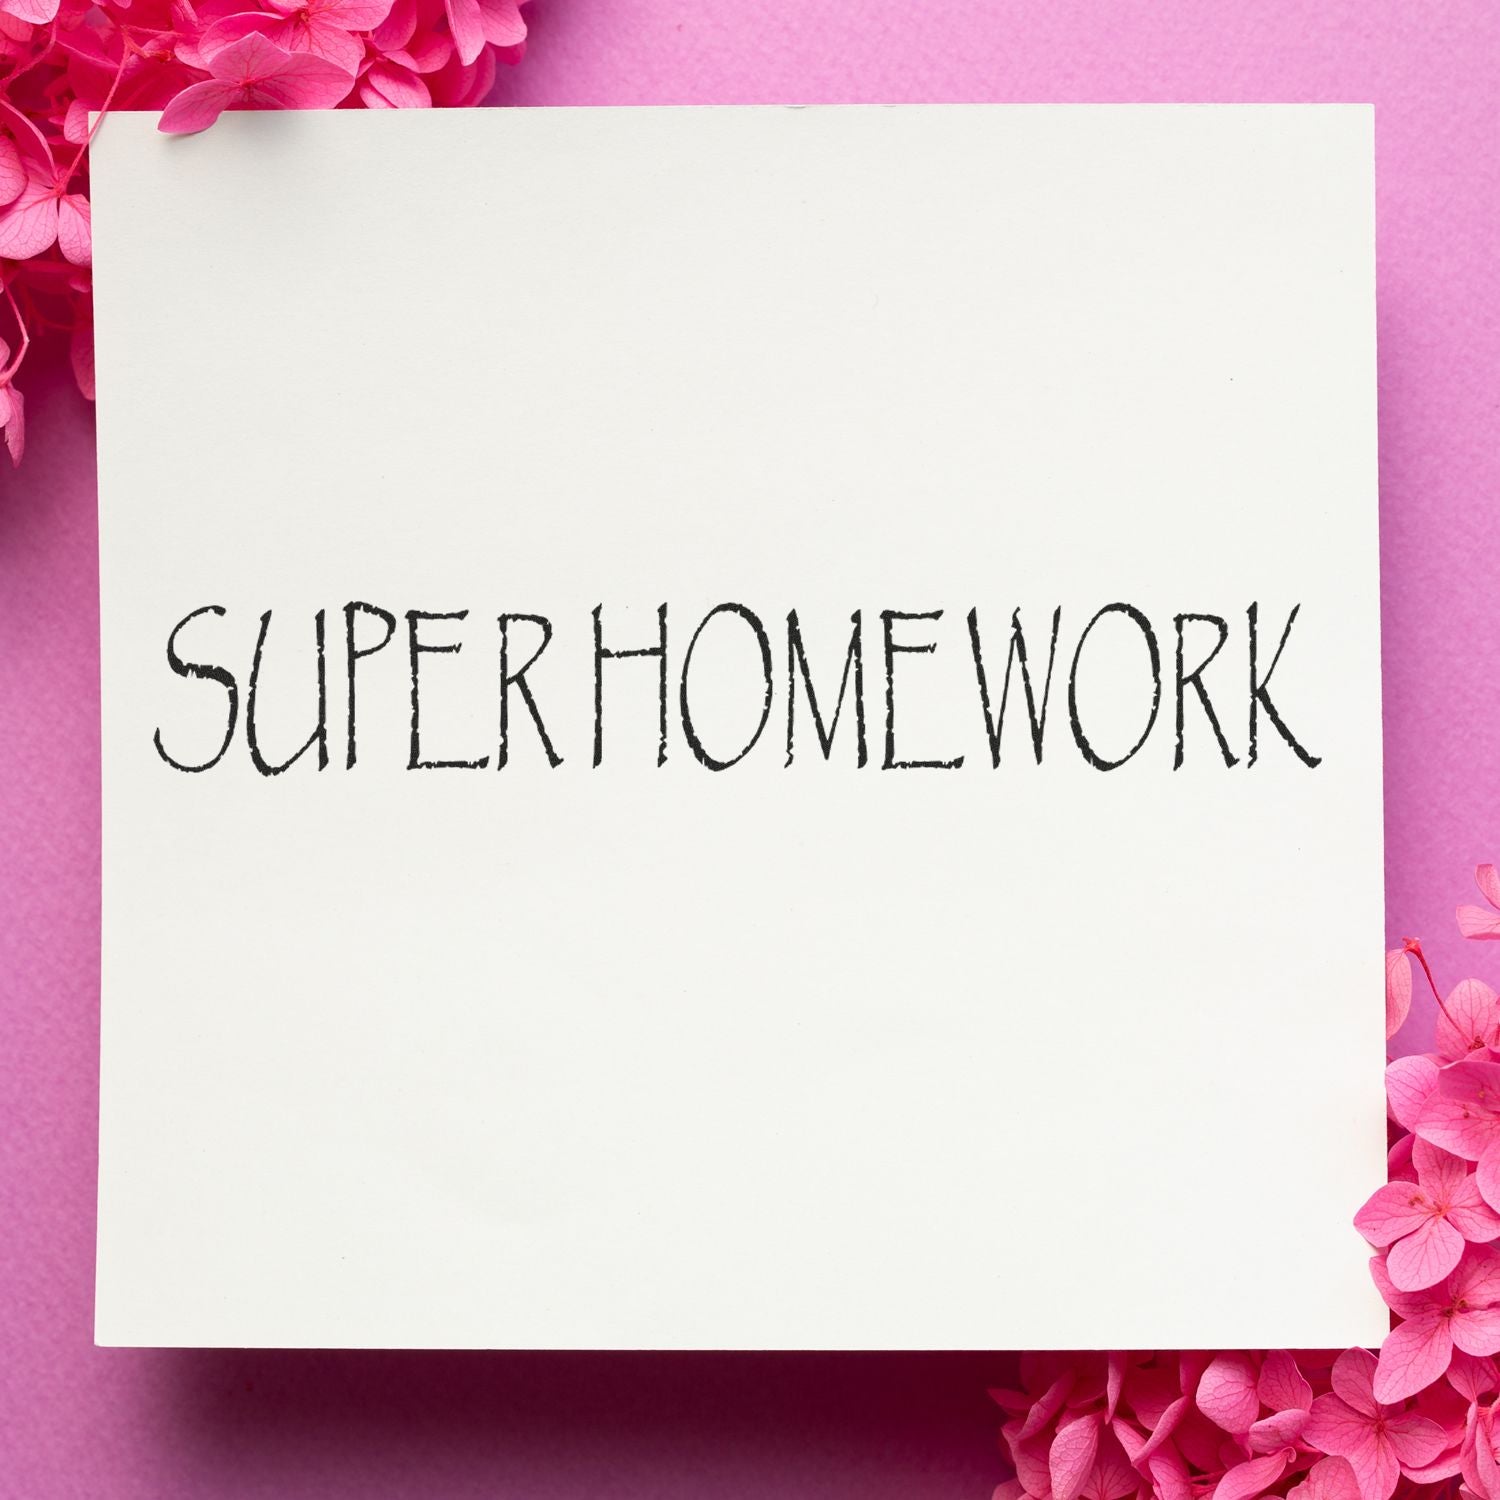 Slim Pre Inked Super Homework Stamp Lifestyle Photo